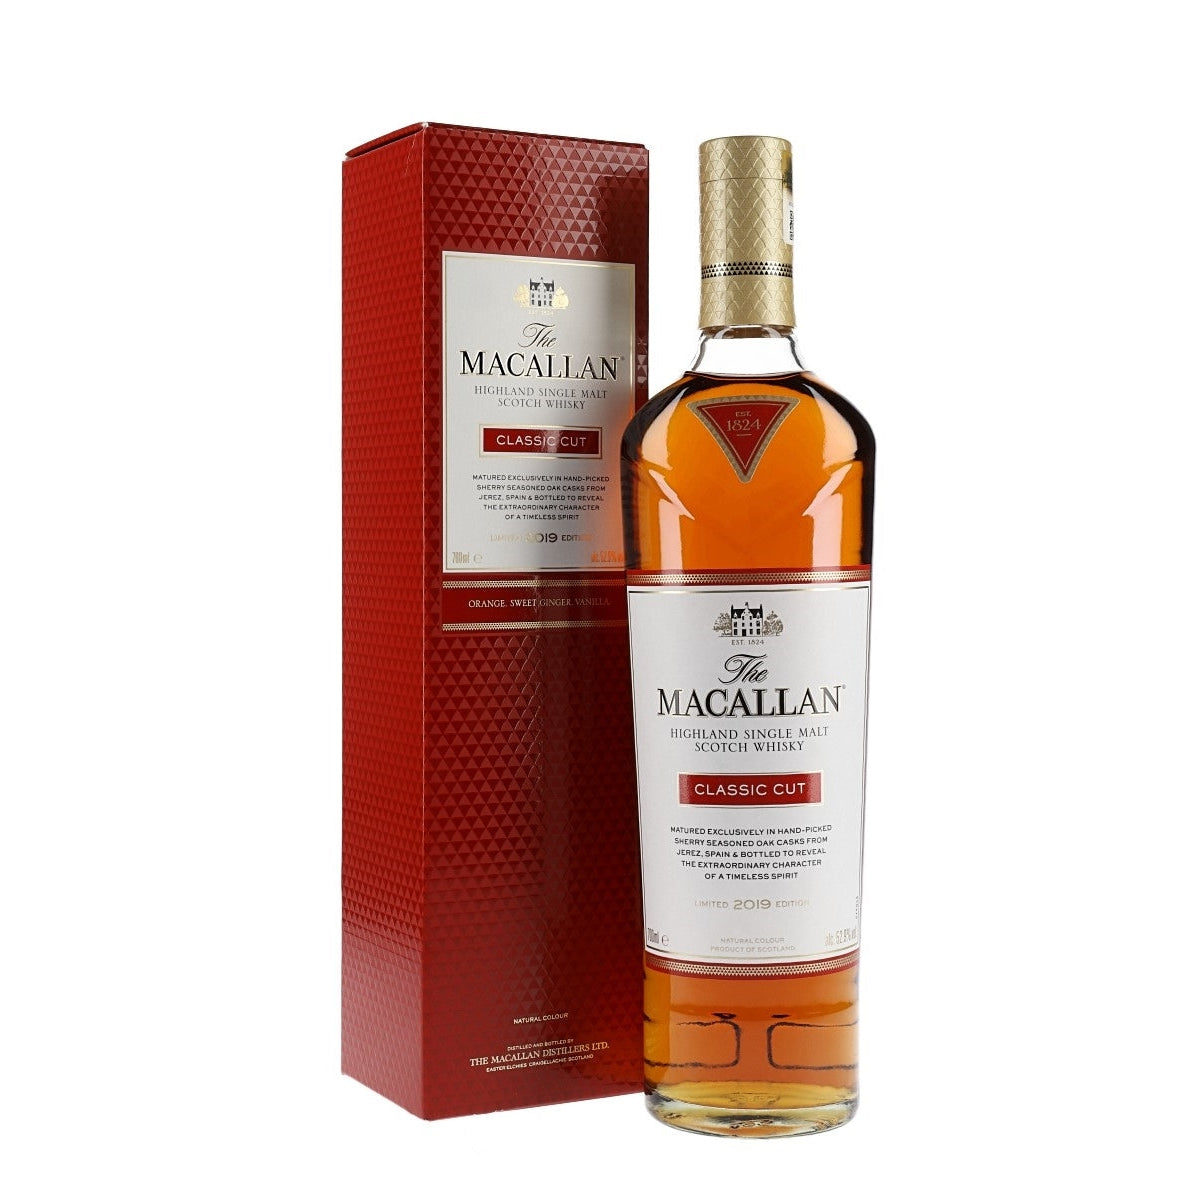 The Macallan Classic Cut 2019 Limited Edition Highland Single Malt Scotch Whisky 750 ML